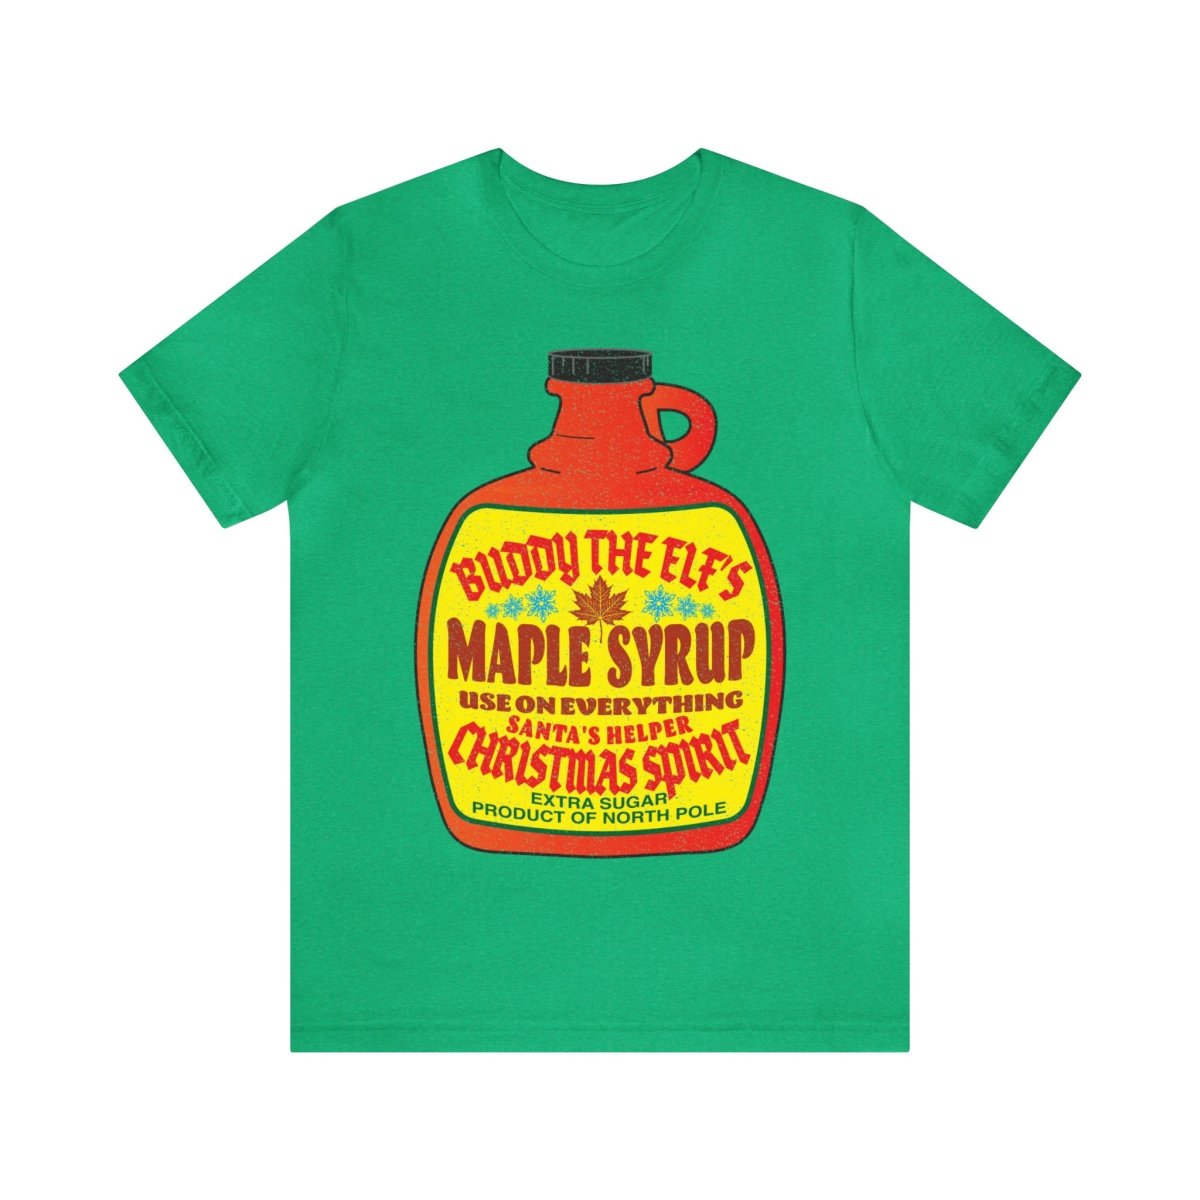 Buddy's Maple Syrup Premium T-Shirt, Christmas Spirit, Extra Sugar, Santa's Helper, Elf Made in North Pole